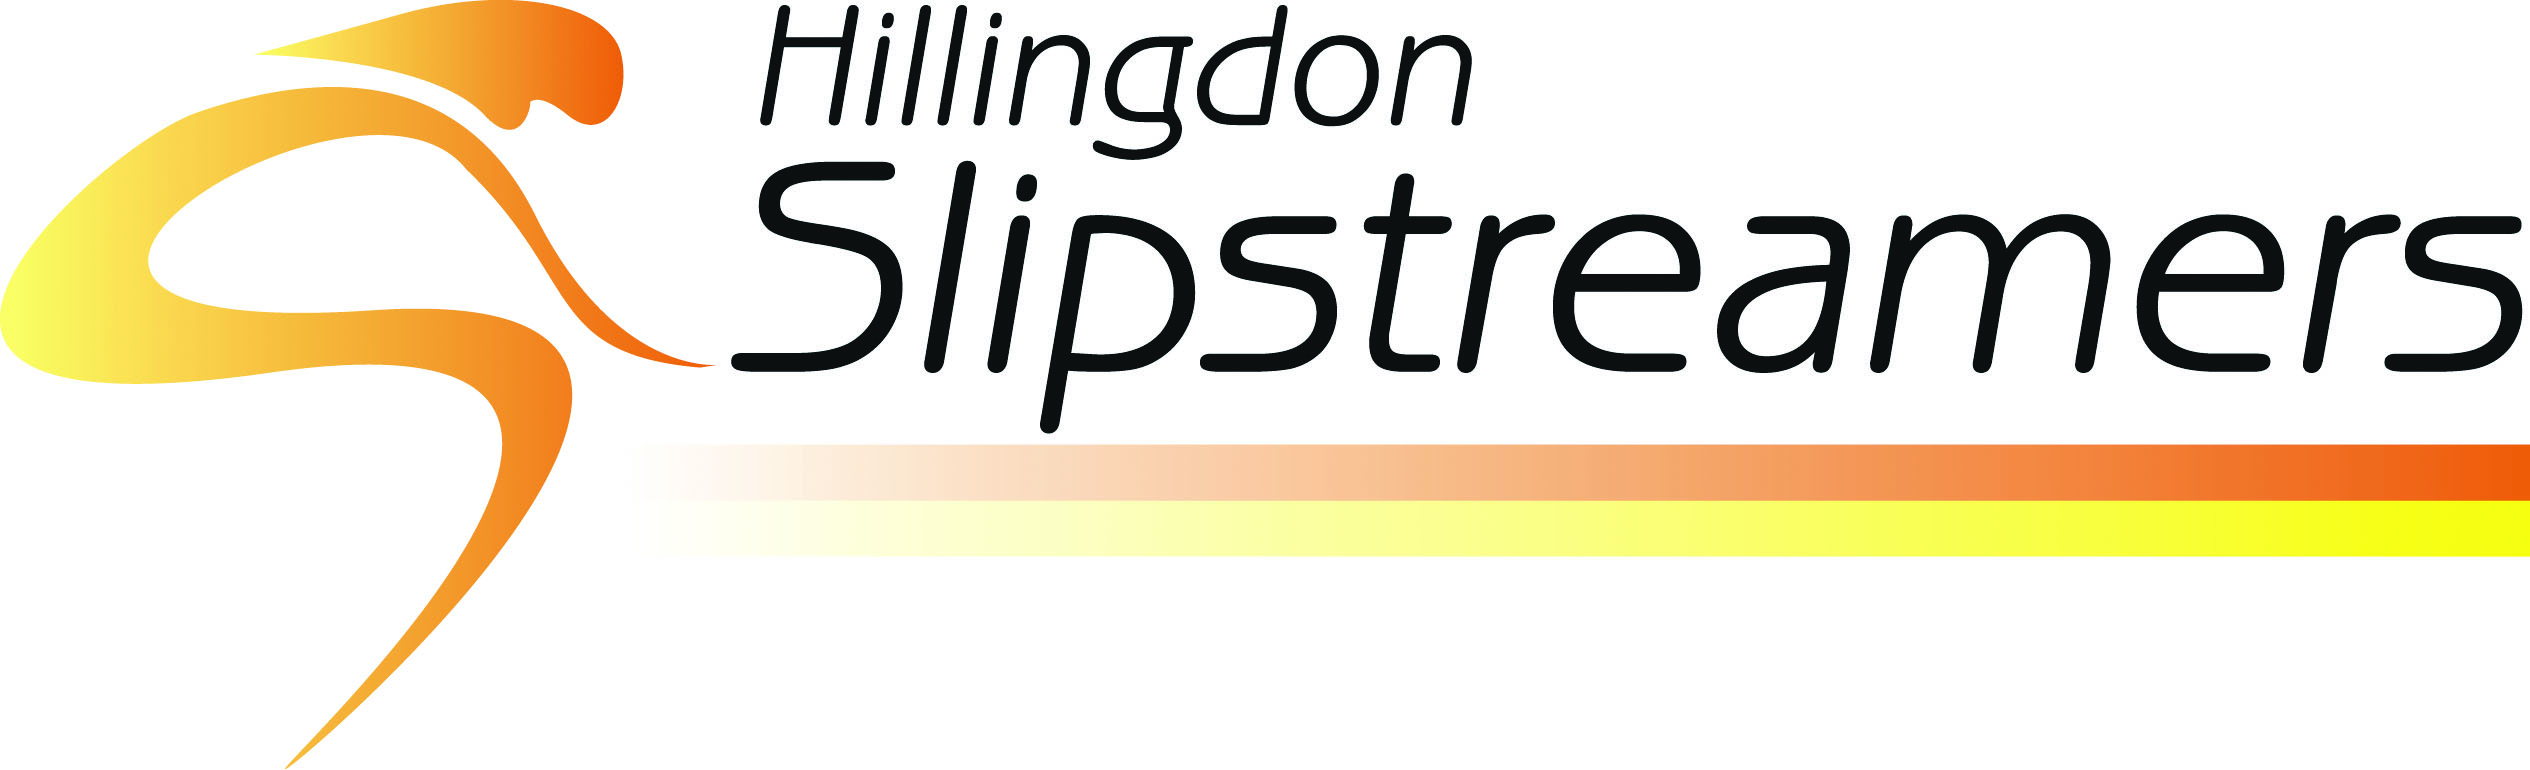 Hillingdon Slipstreamers